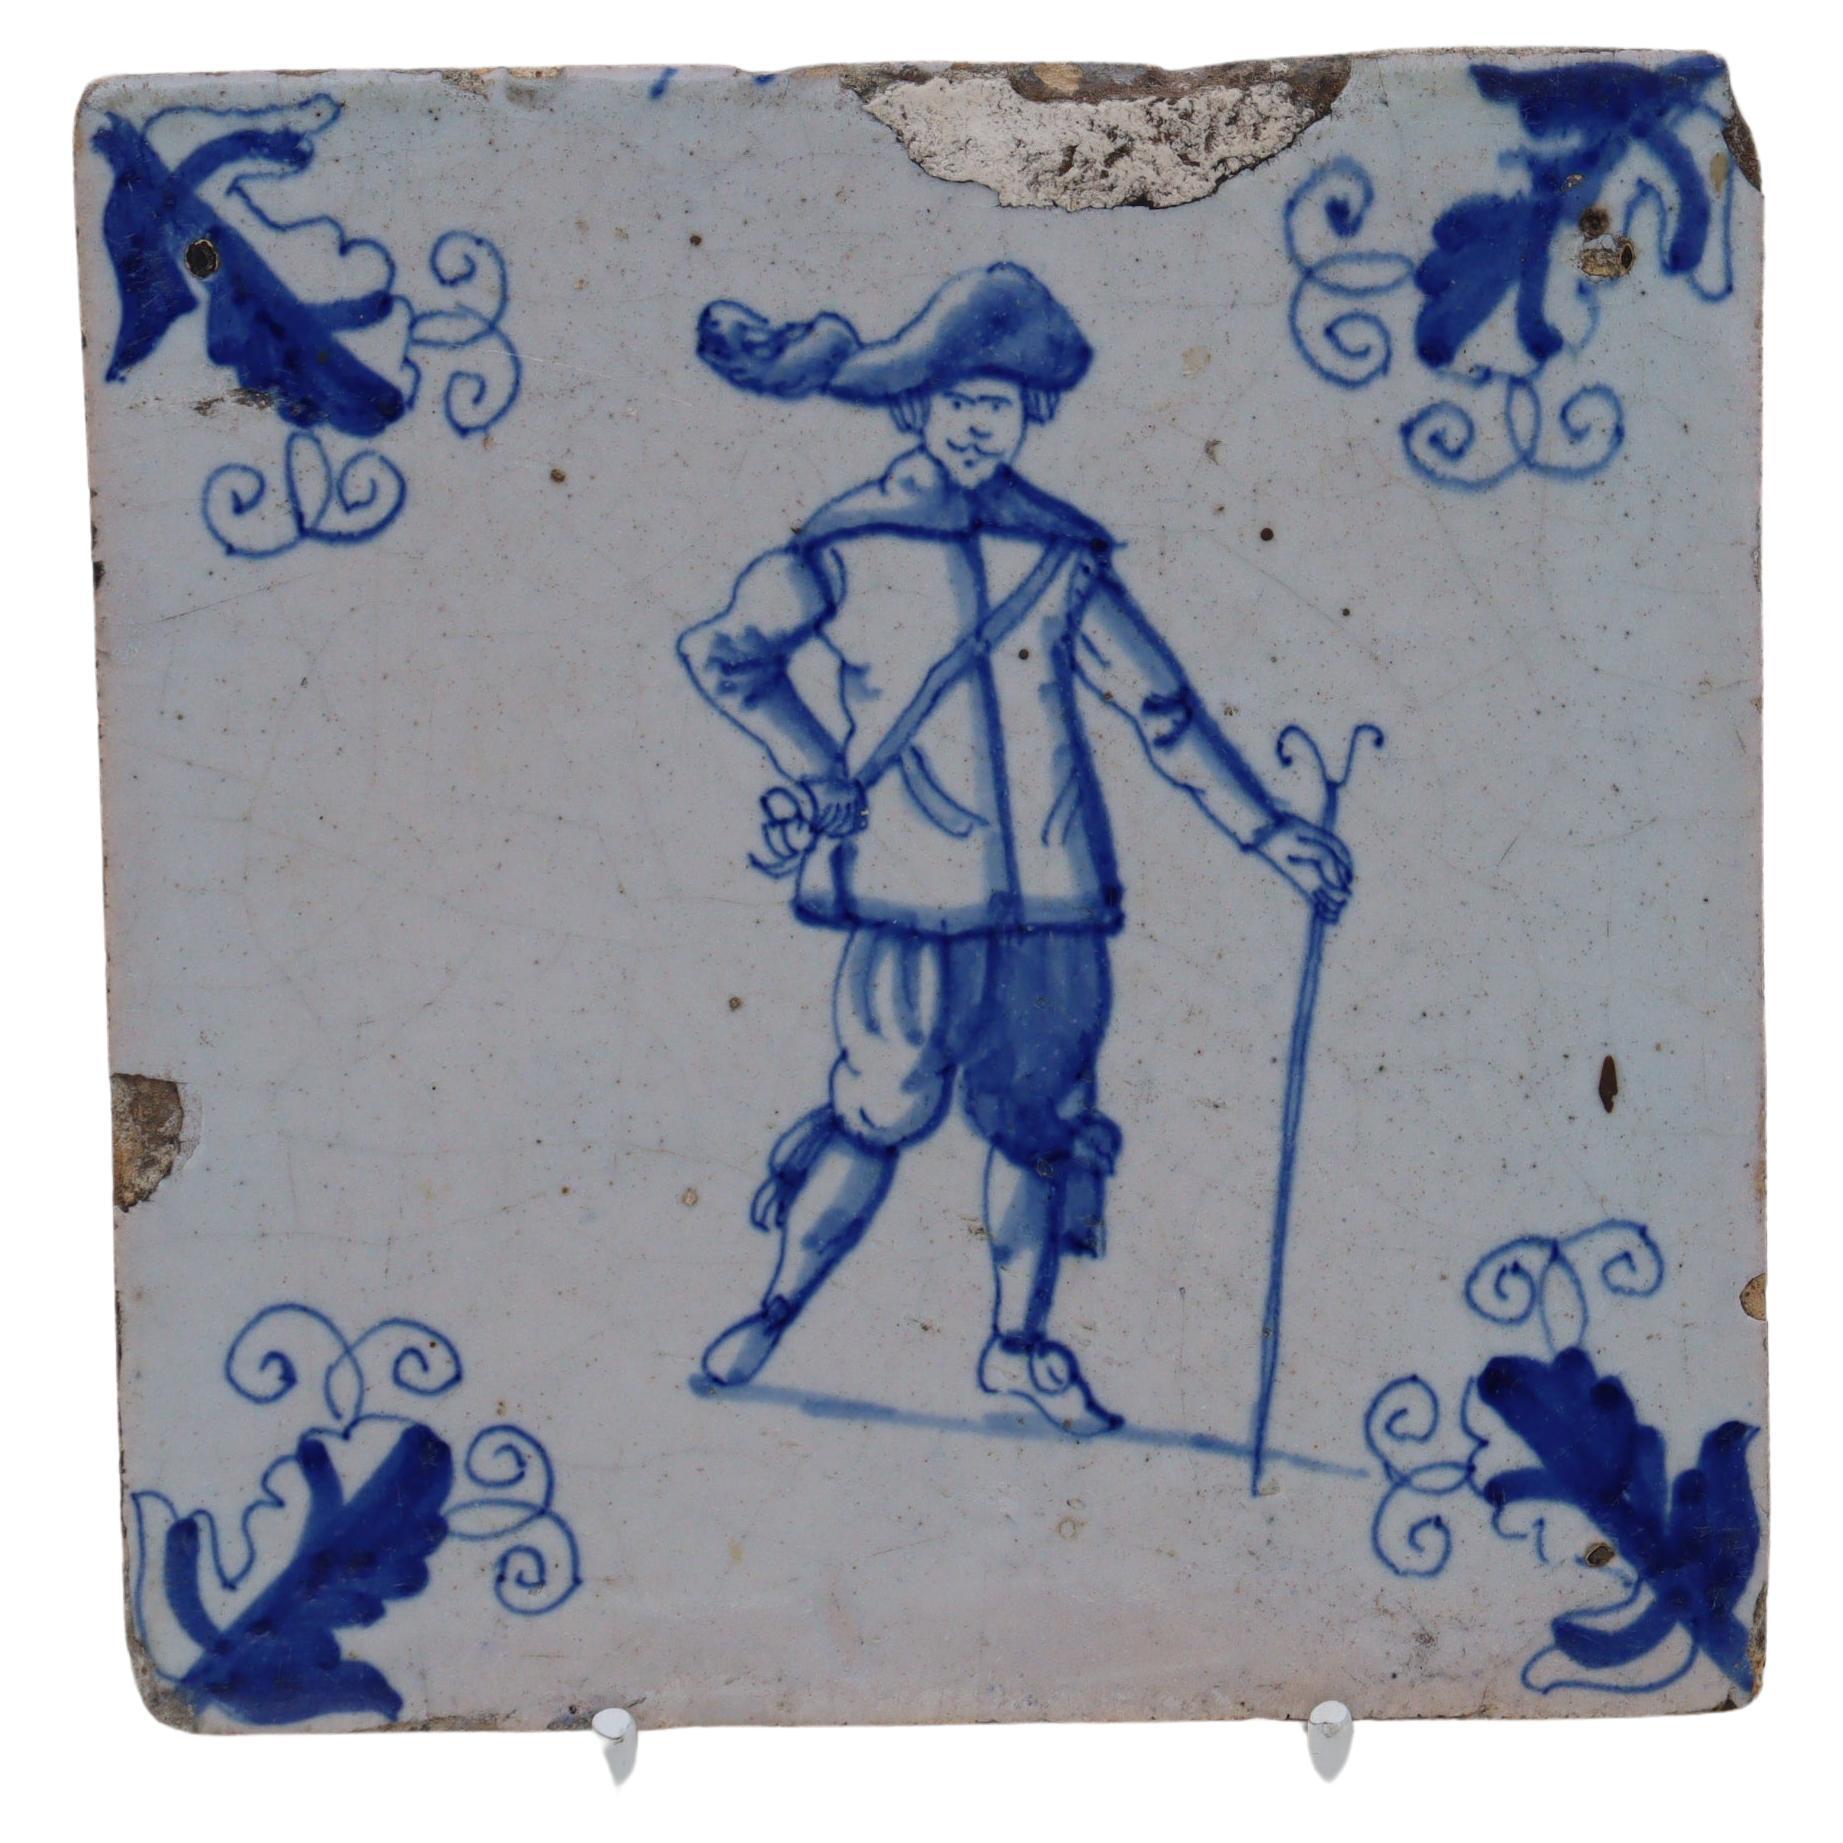 When were Delft tiles made?